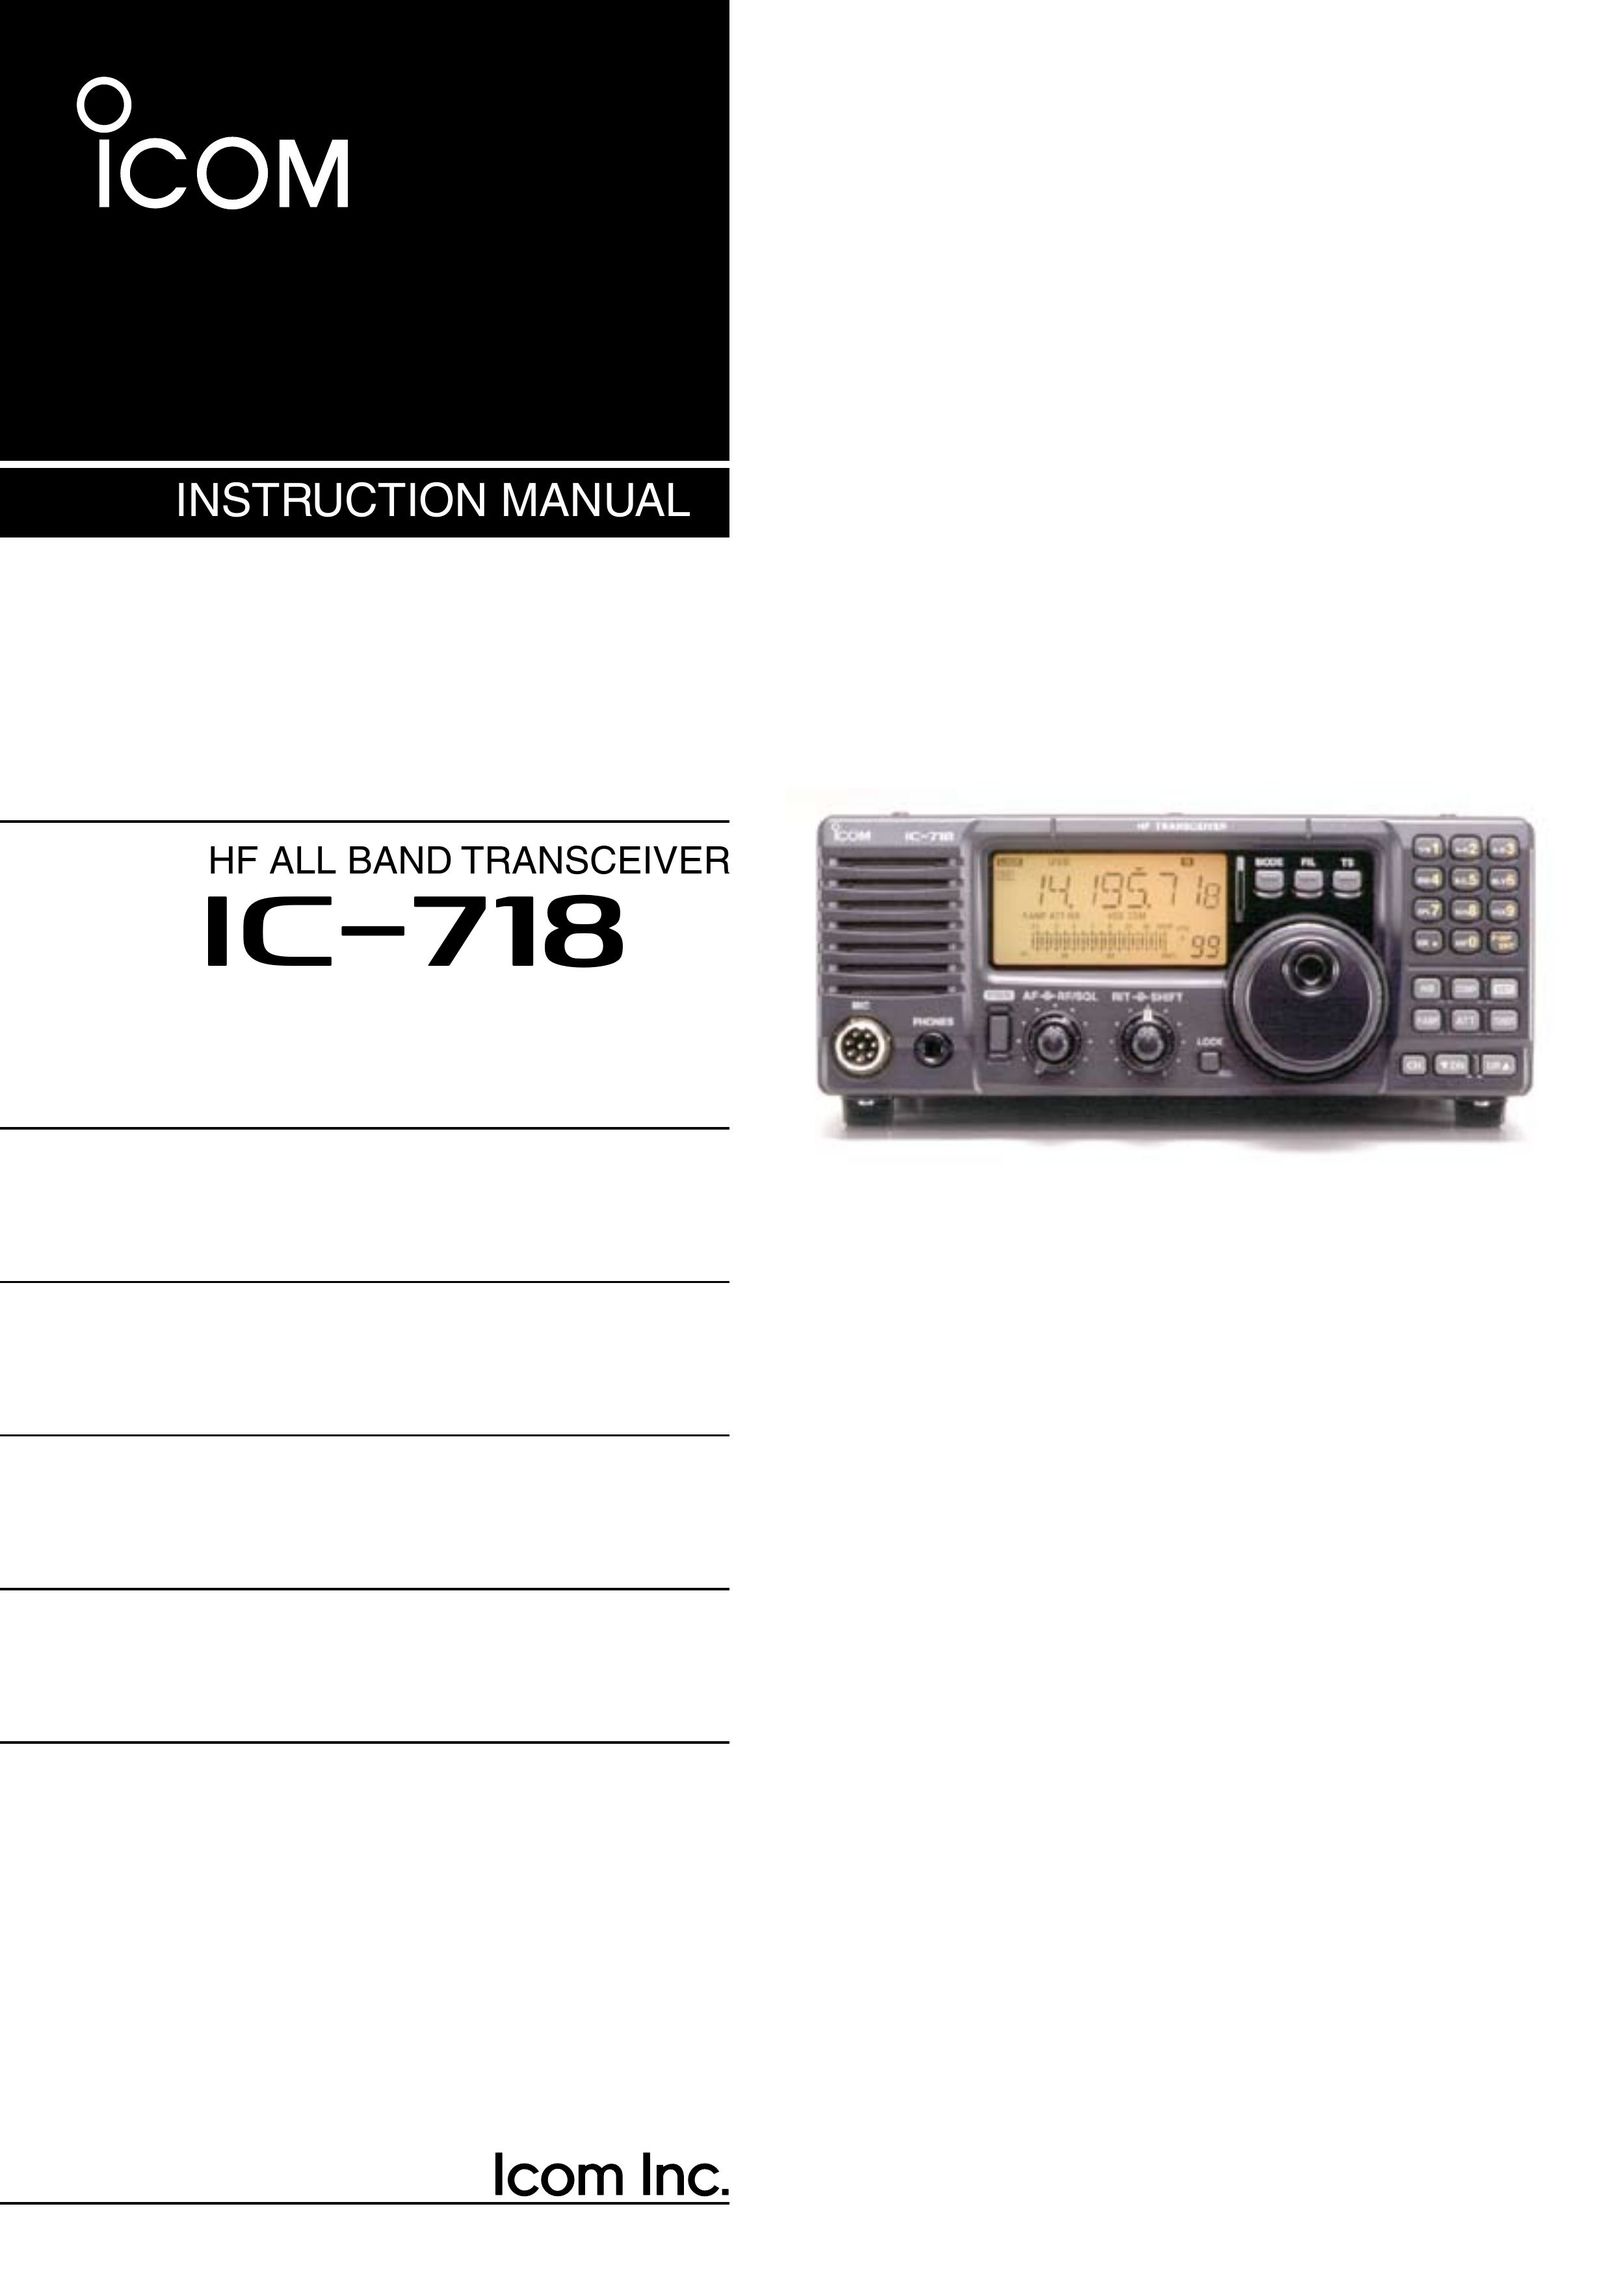 Icom IC-718 Two-Way Radio User Manual